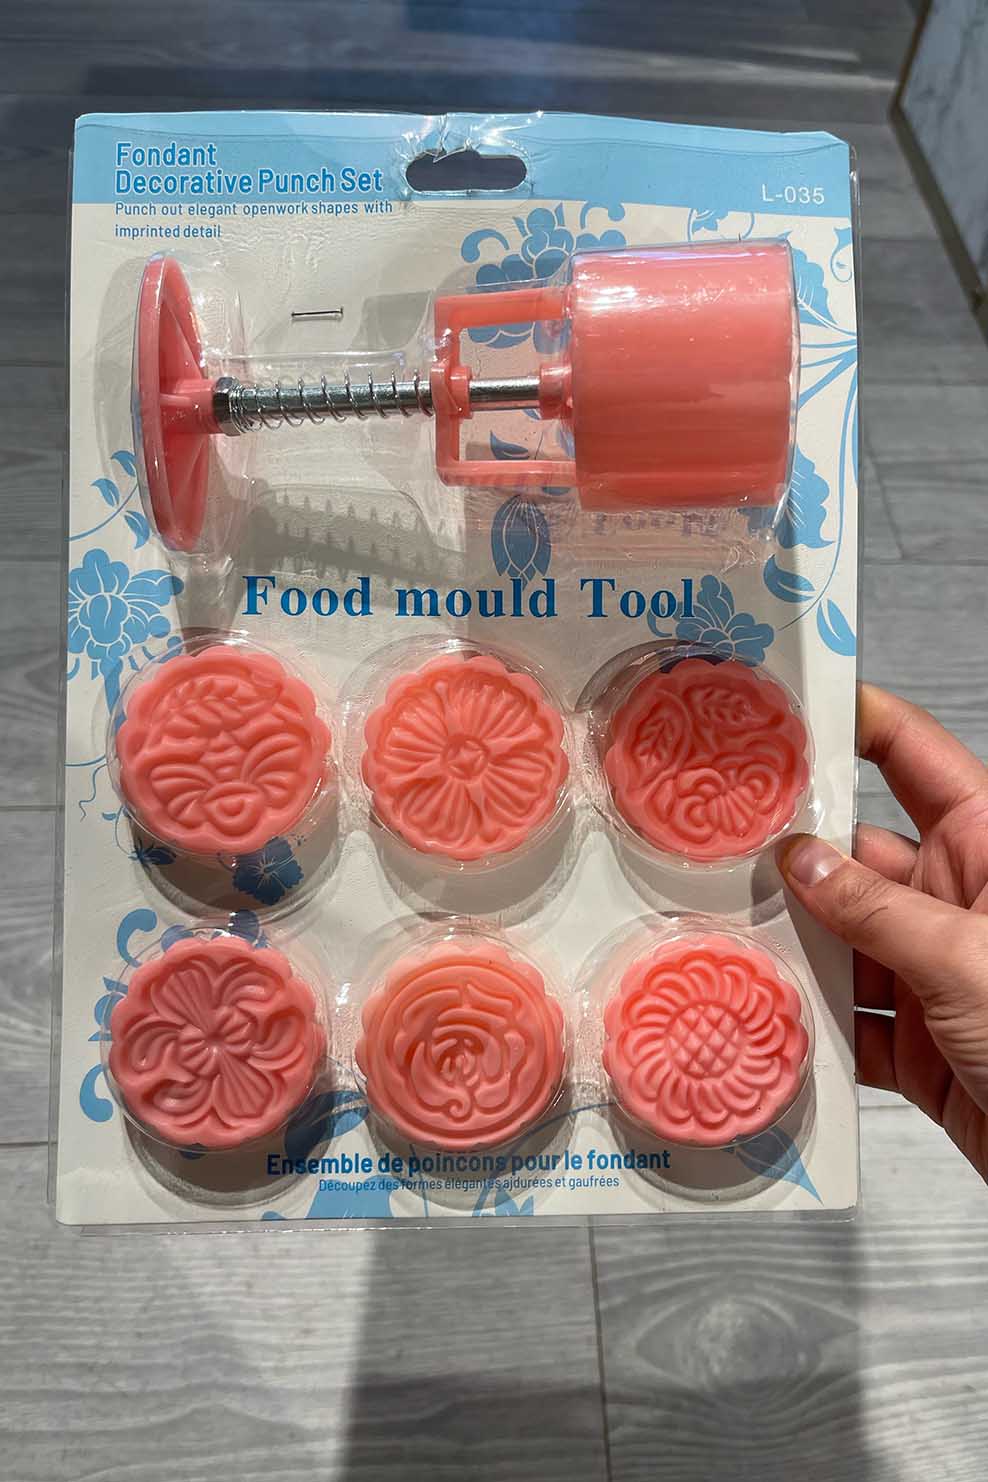 Food Mould Tool - Fondant Decorative Punch Set